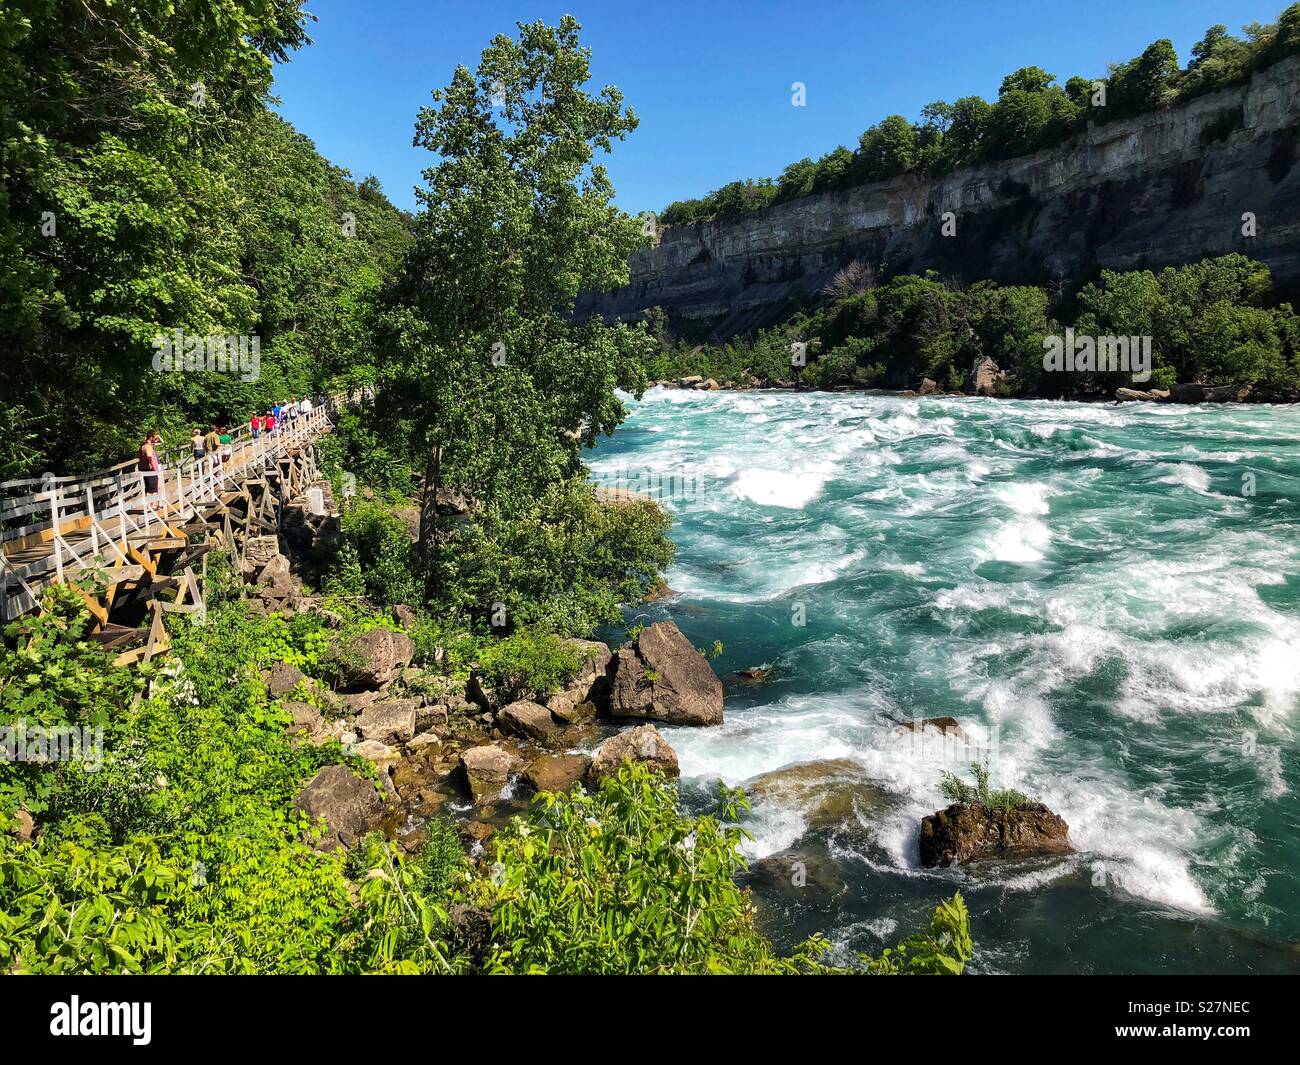 Tourists walk along the white water rapids of the Niagara River in Niagara Falls, Ontario, Canada Stock Photo